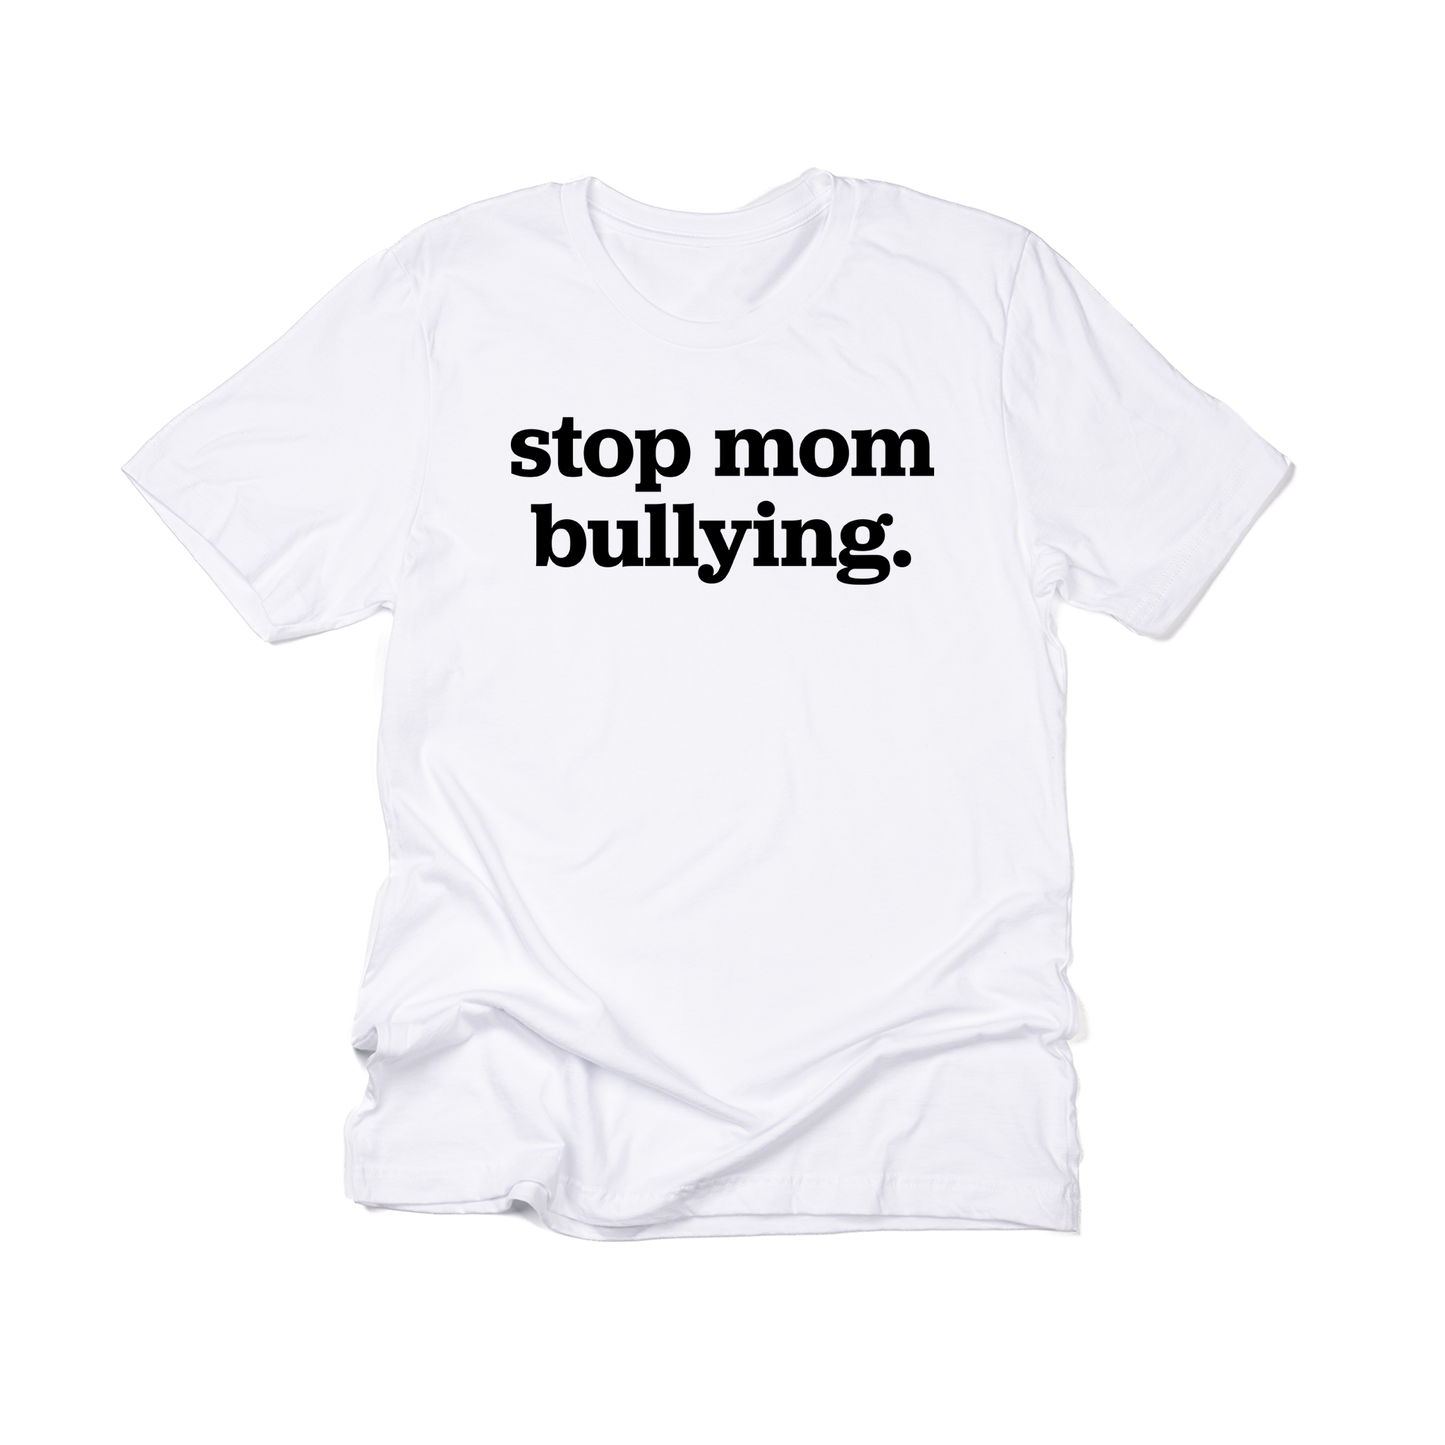 Stop Mom Bullying (Across Front, Black) - Tee (White)